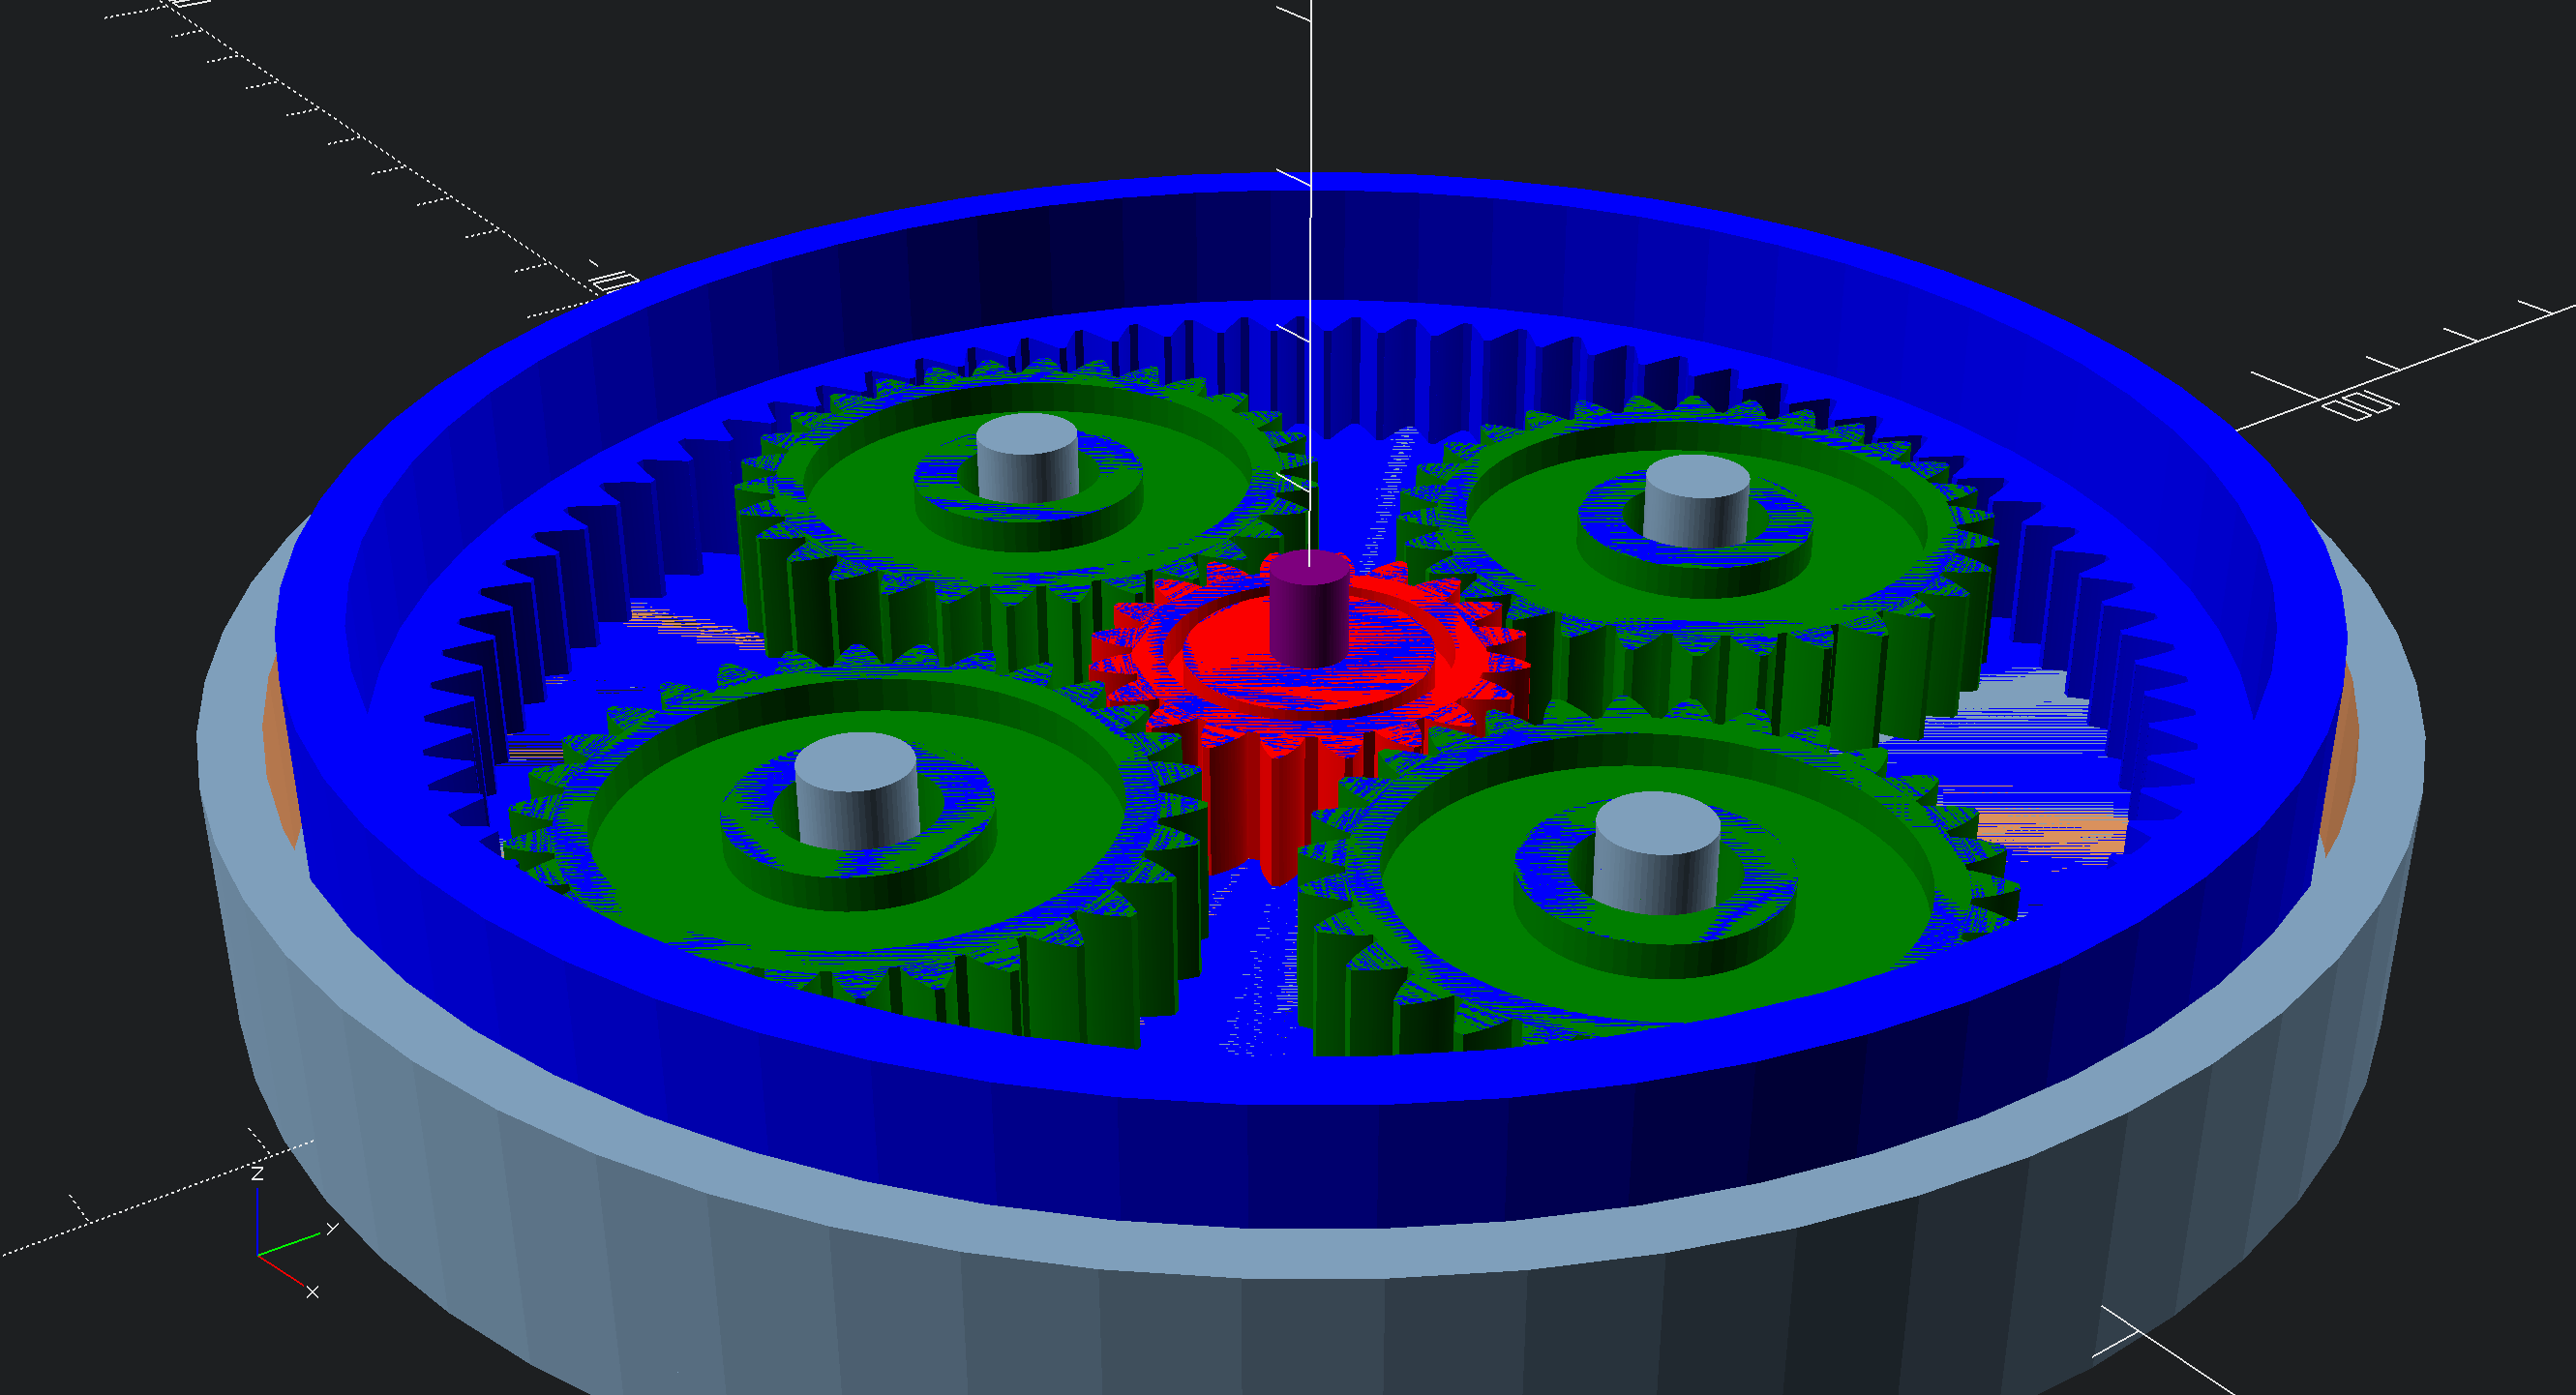 Rotating Base Designed, 3D Printing has begun!, Details